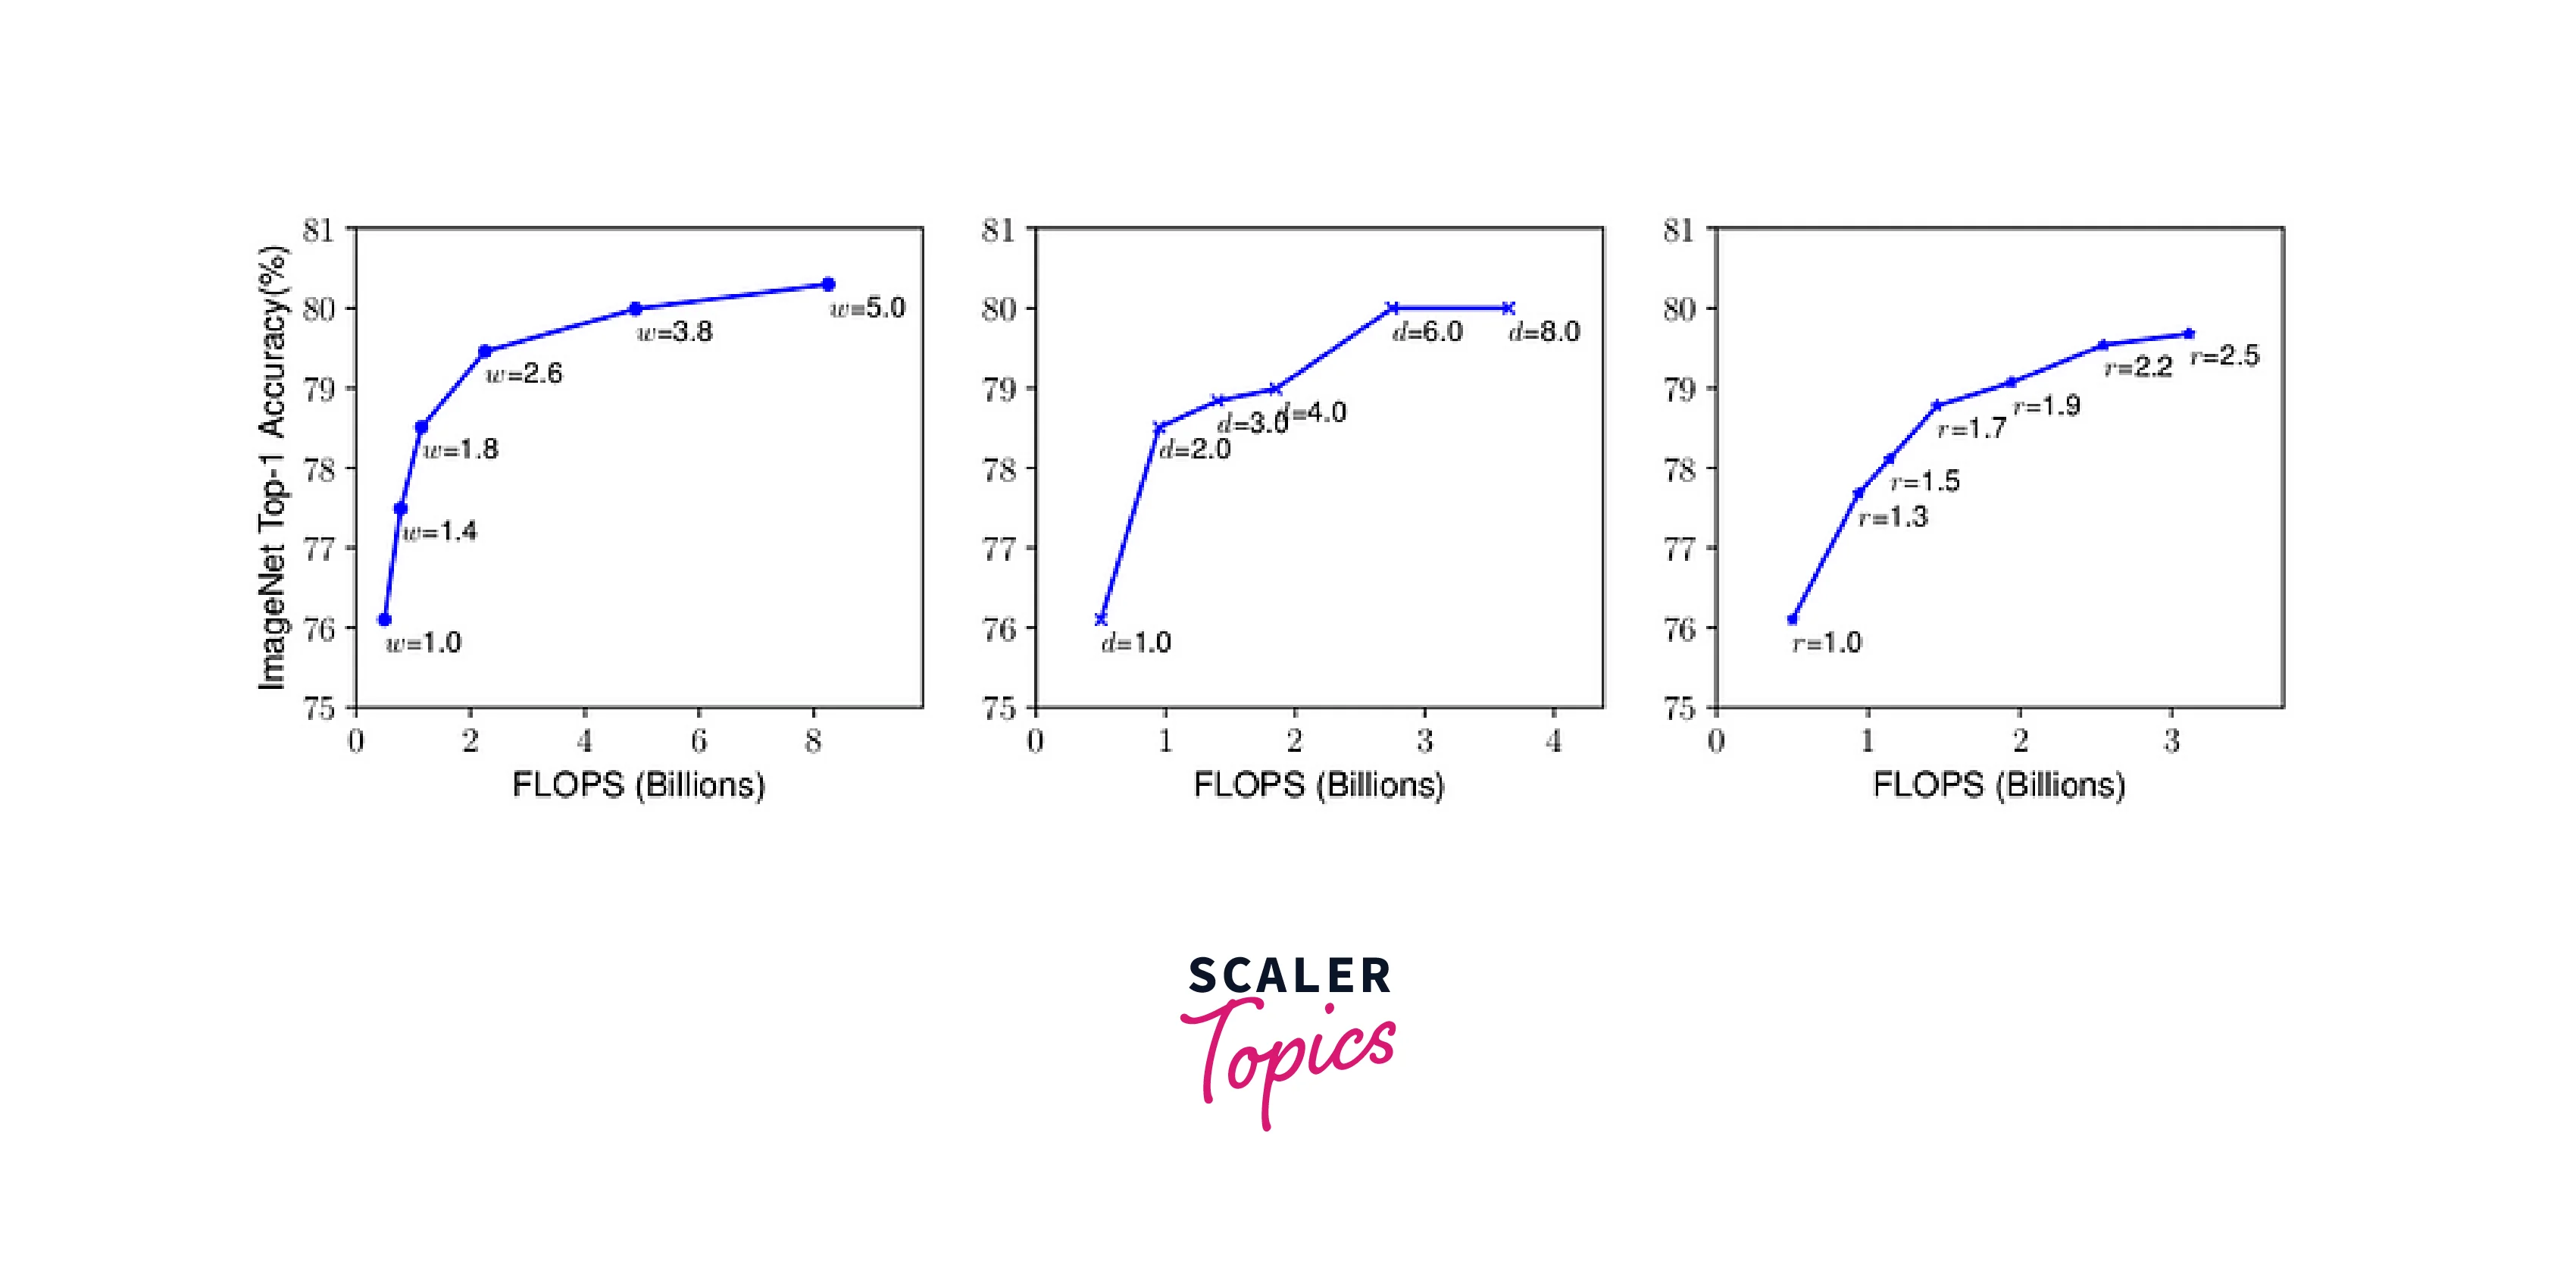 1-D scaling method
performance